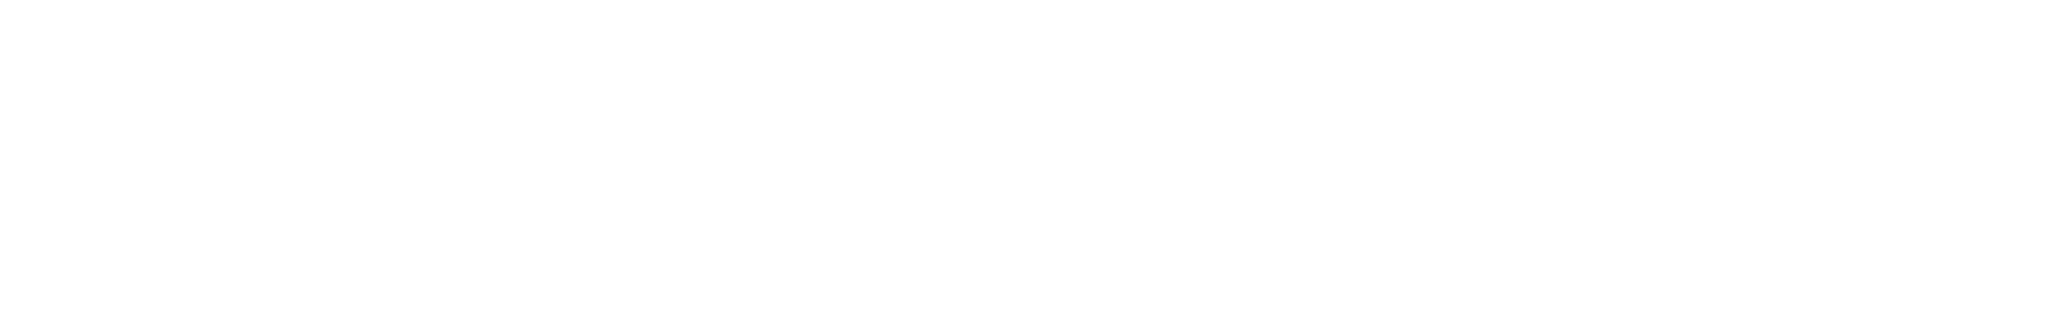 Spotify Advertising Logo Factory White